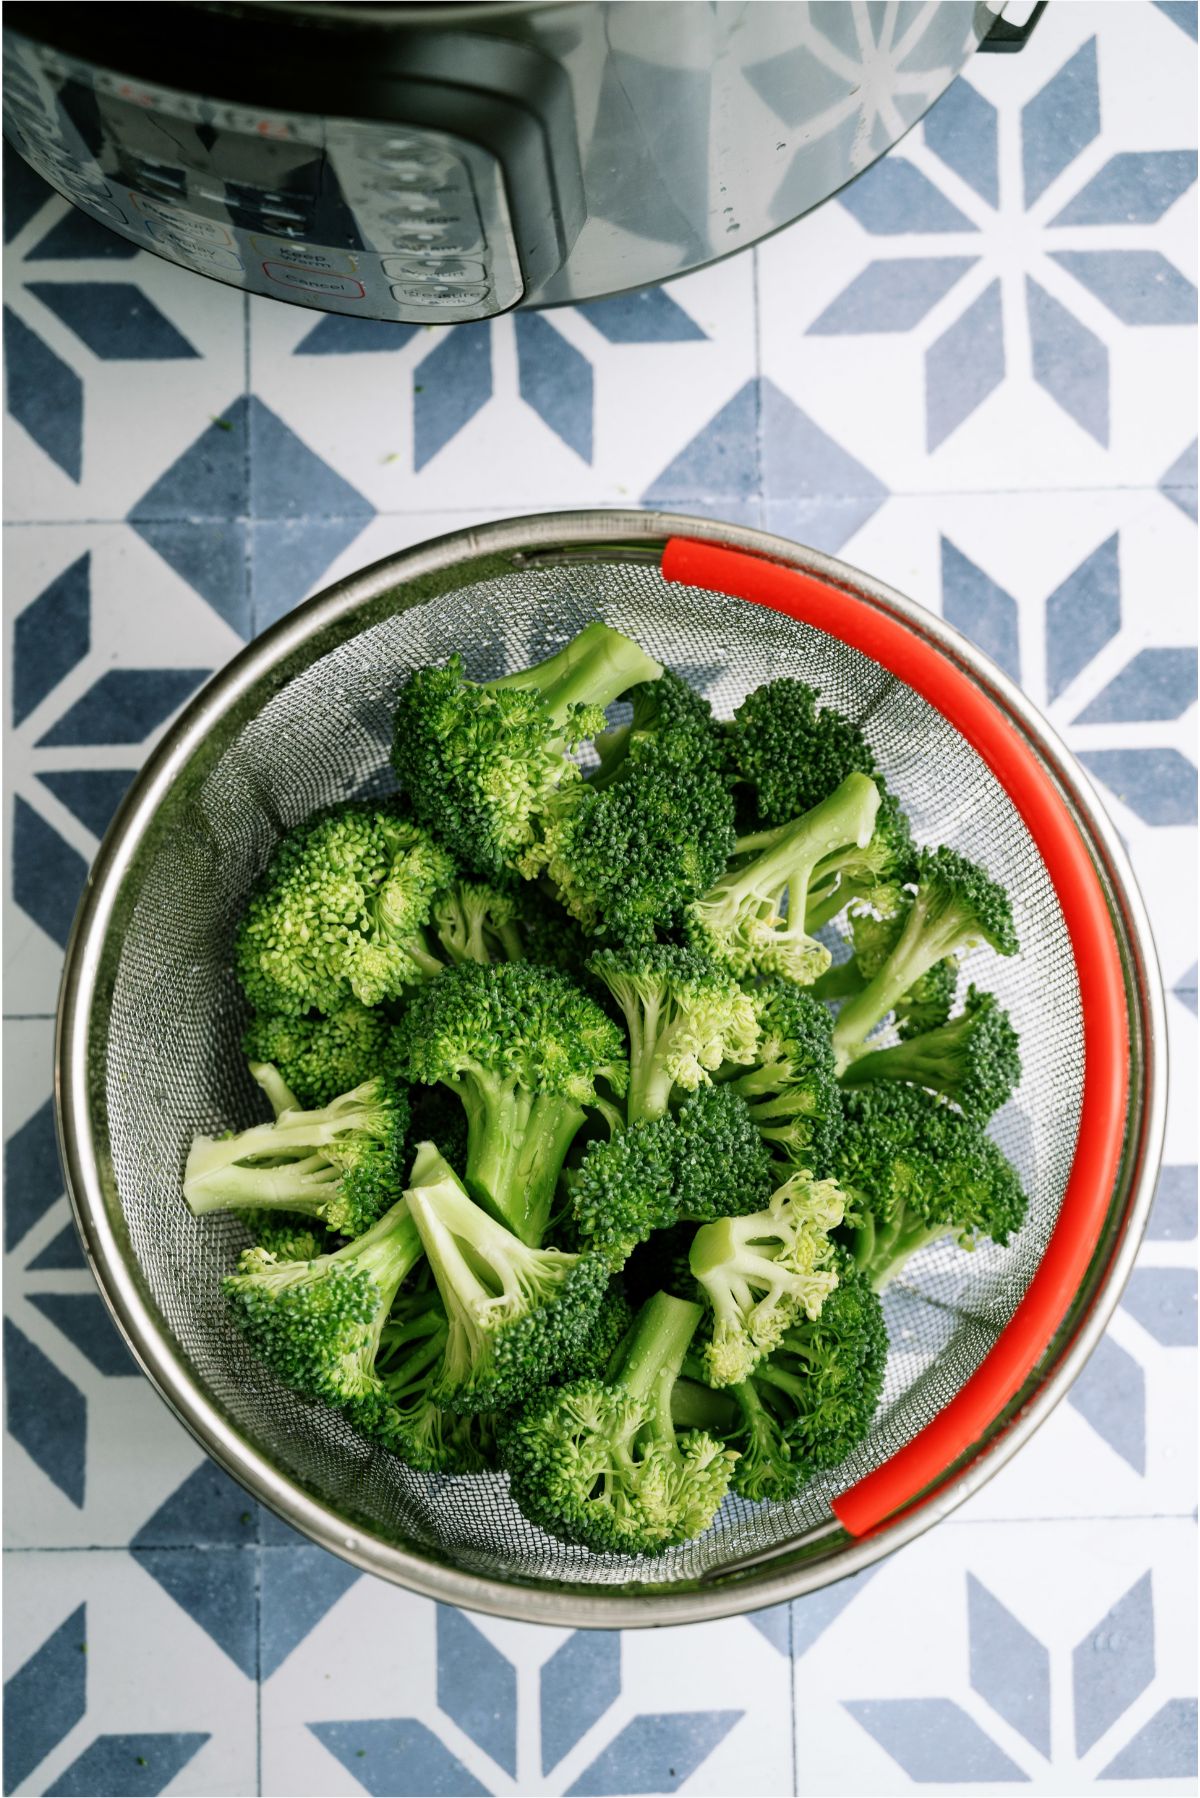 Broccoli in a steamer basket